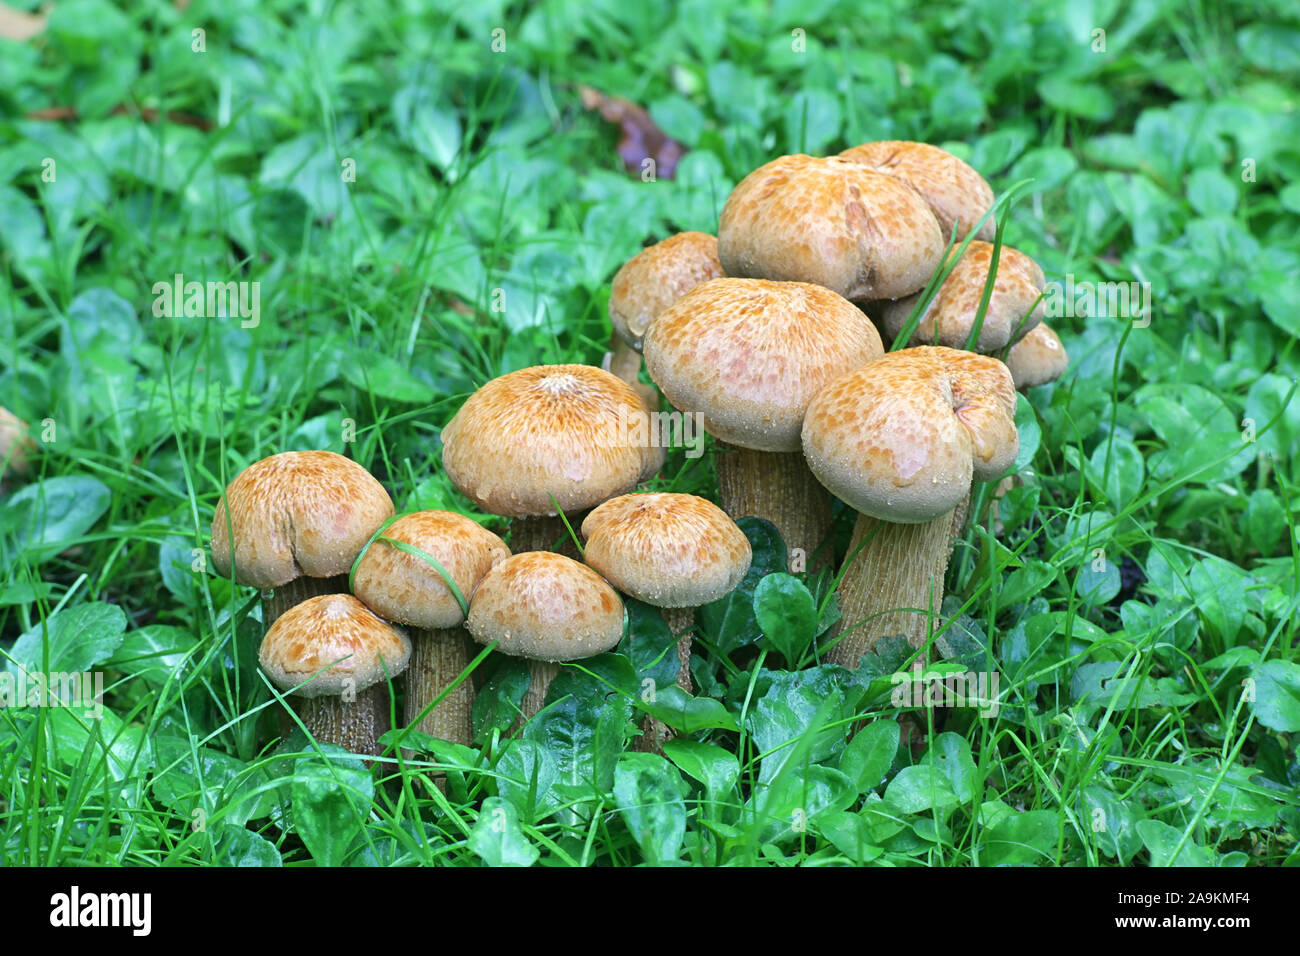 Phaeolepiota aurea, known as golden bootleg or golden cap, wild poisonous mushrooms from Finland Stock Photo